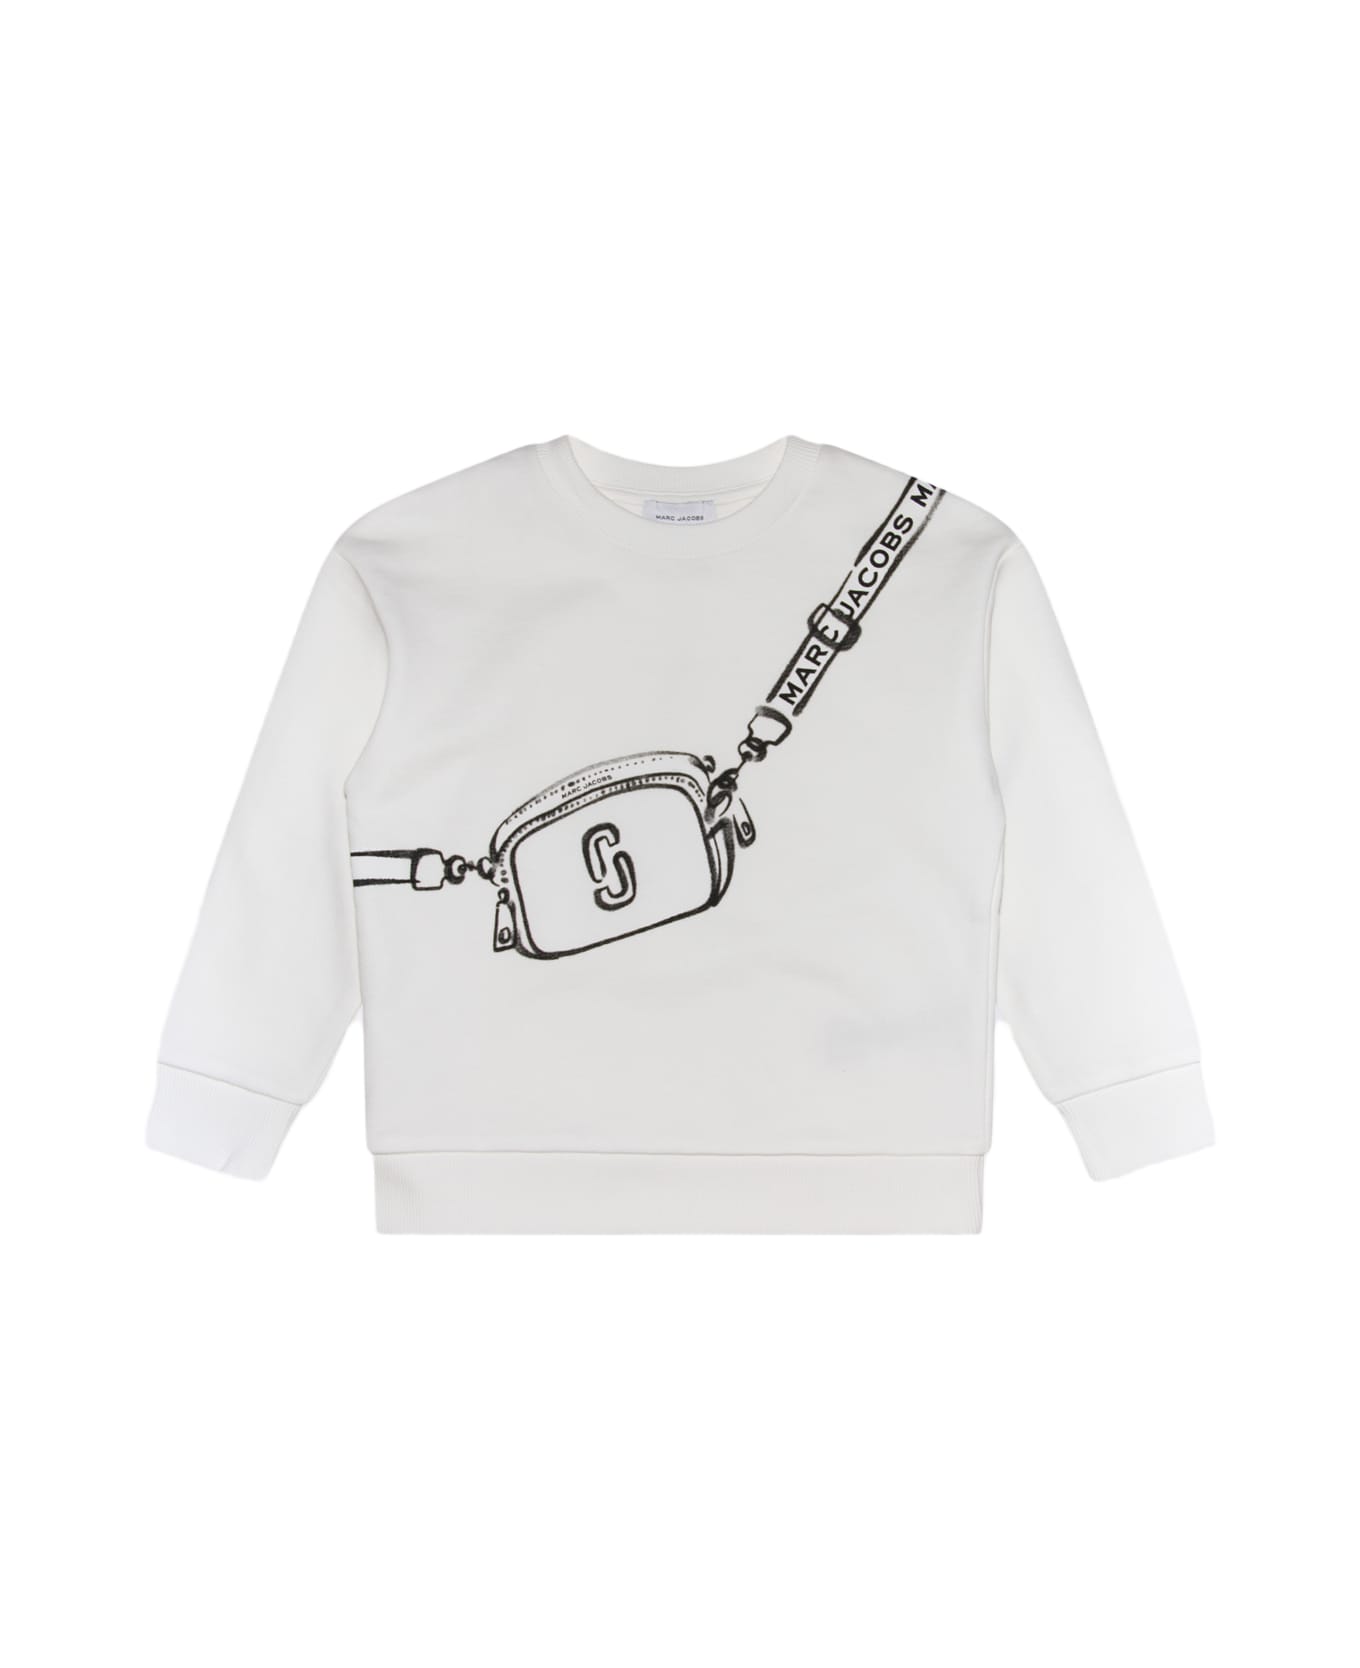 Marc Jacobs White And Black Cotton Sweatshirt - Avorio